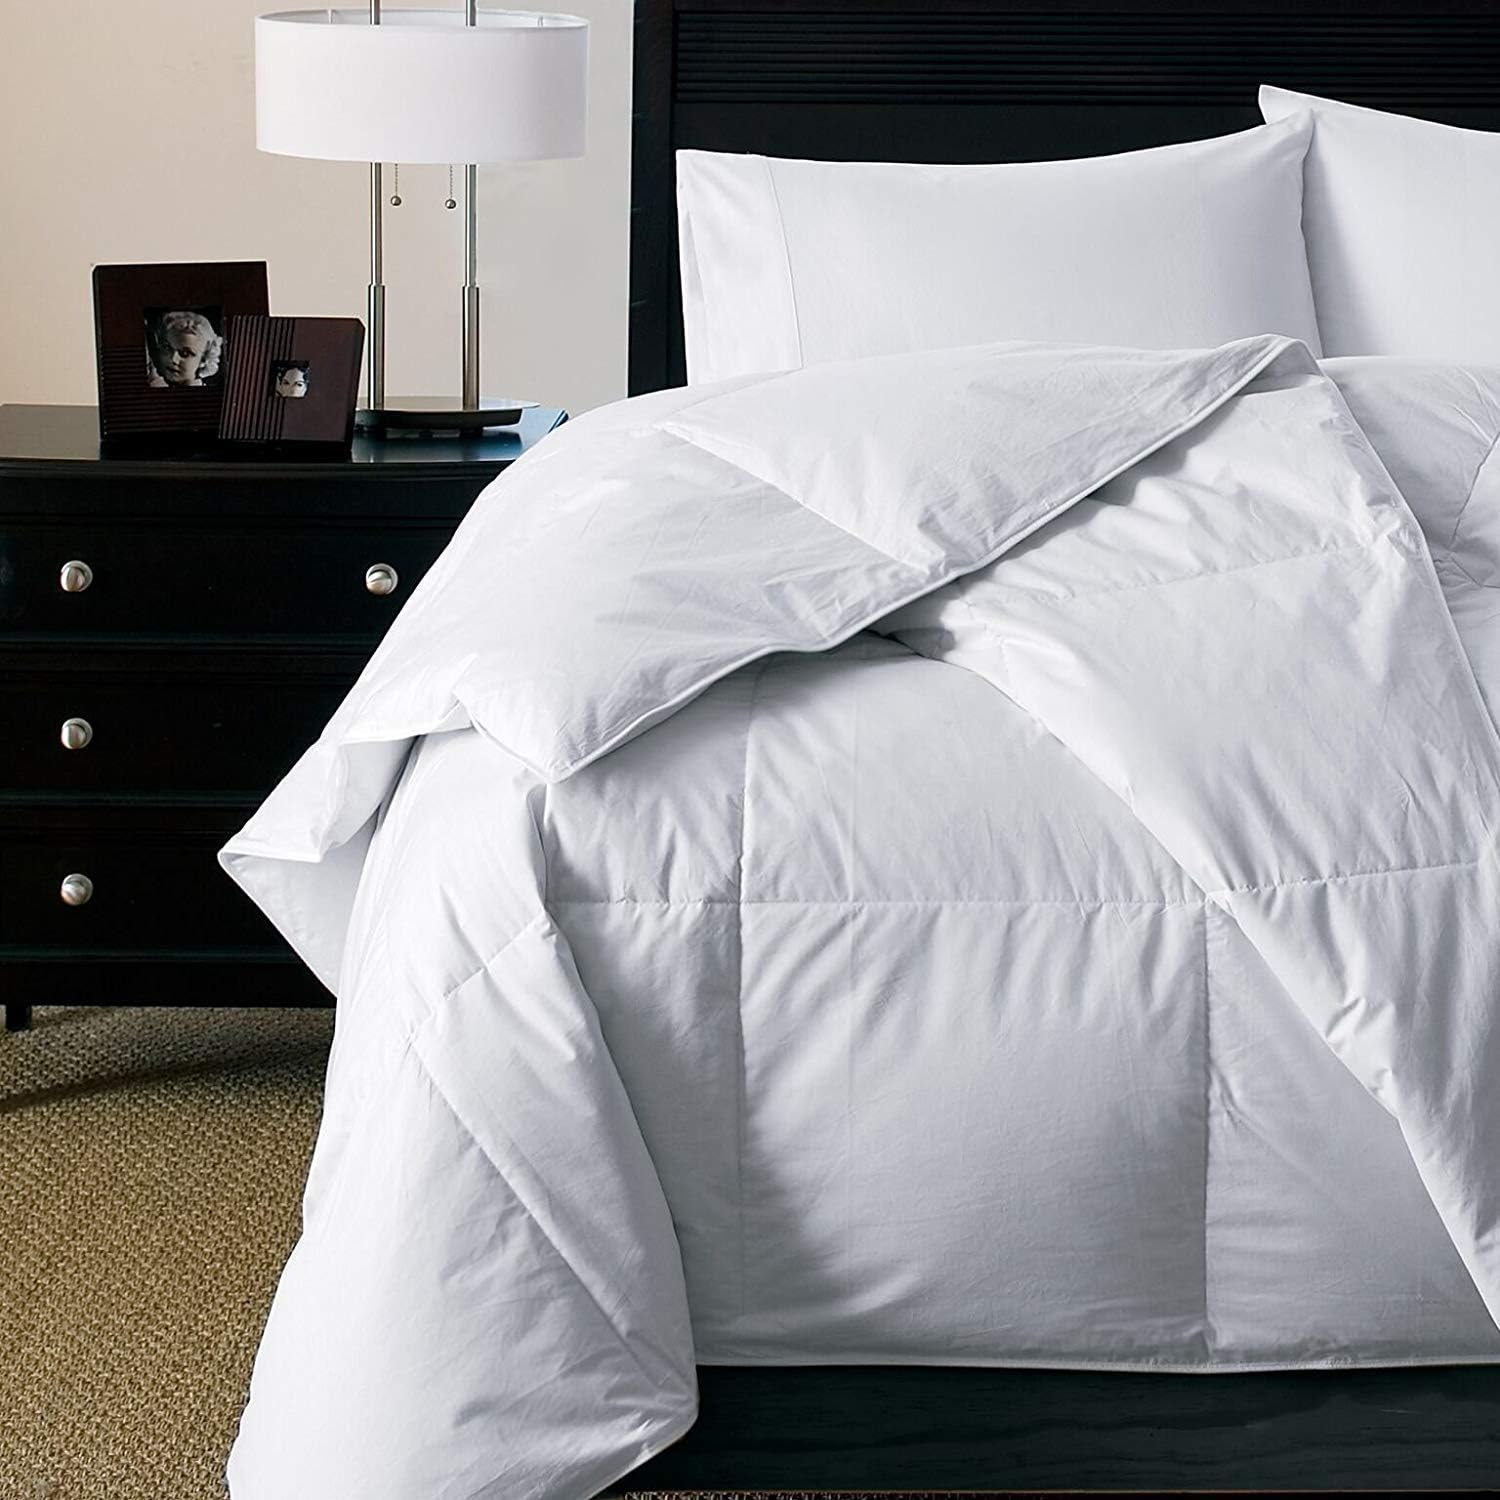 DOWNLITE Comforter Review: Is it the Ultimate Sleep Upgrade?